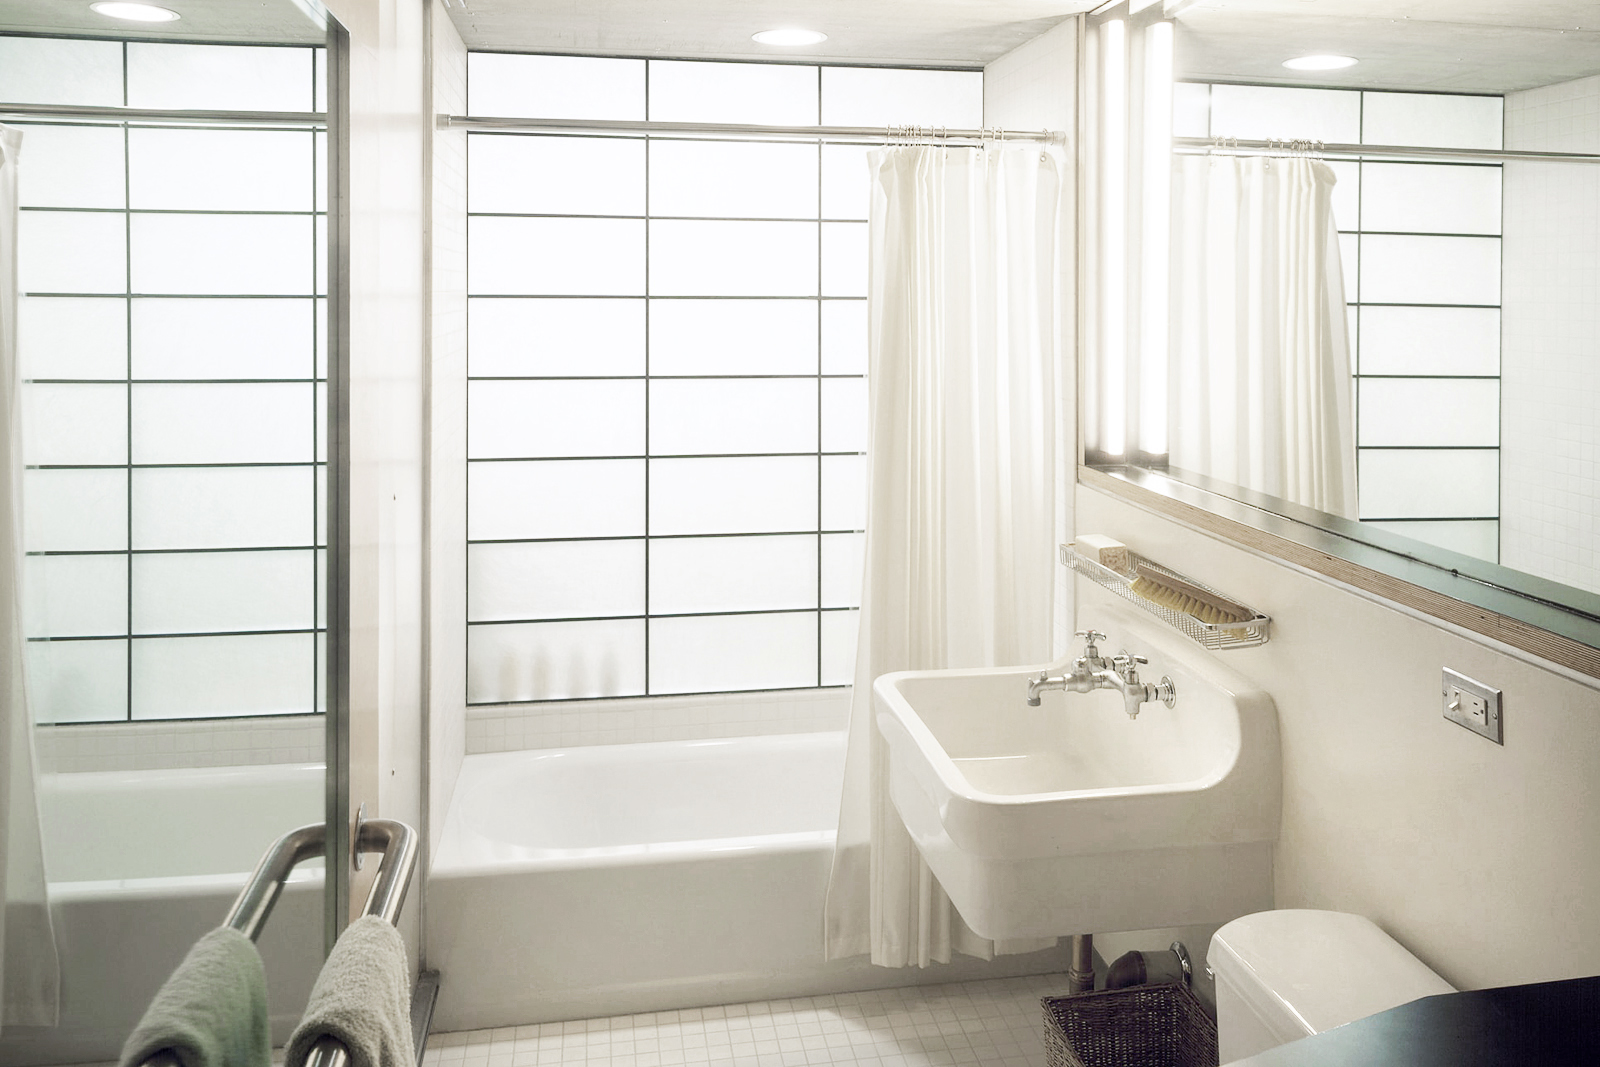 13-res4-resolution-4-architecture-modern-apartment-residential-rons-loft-interior-bathroom.jpg